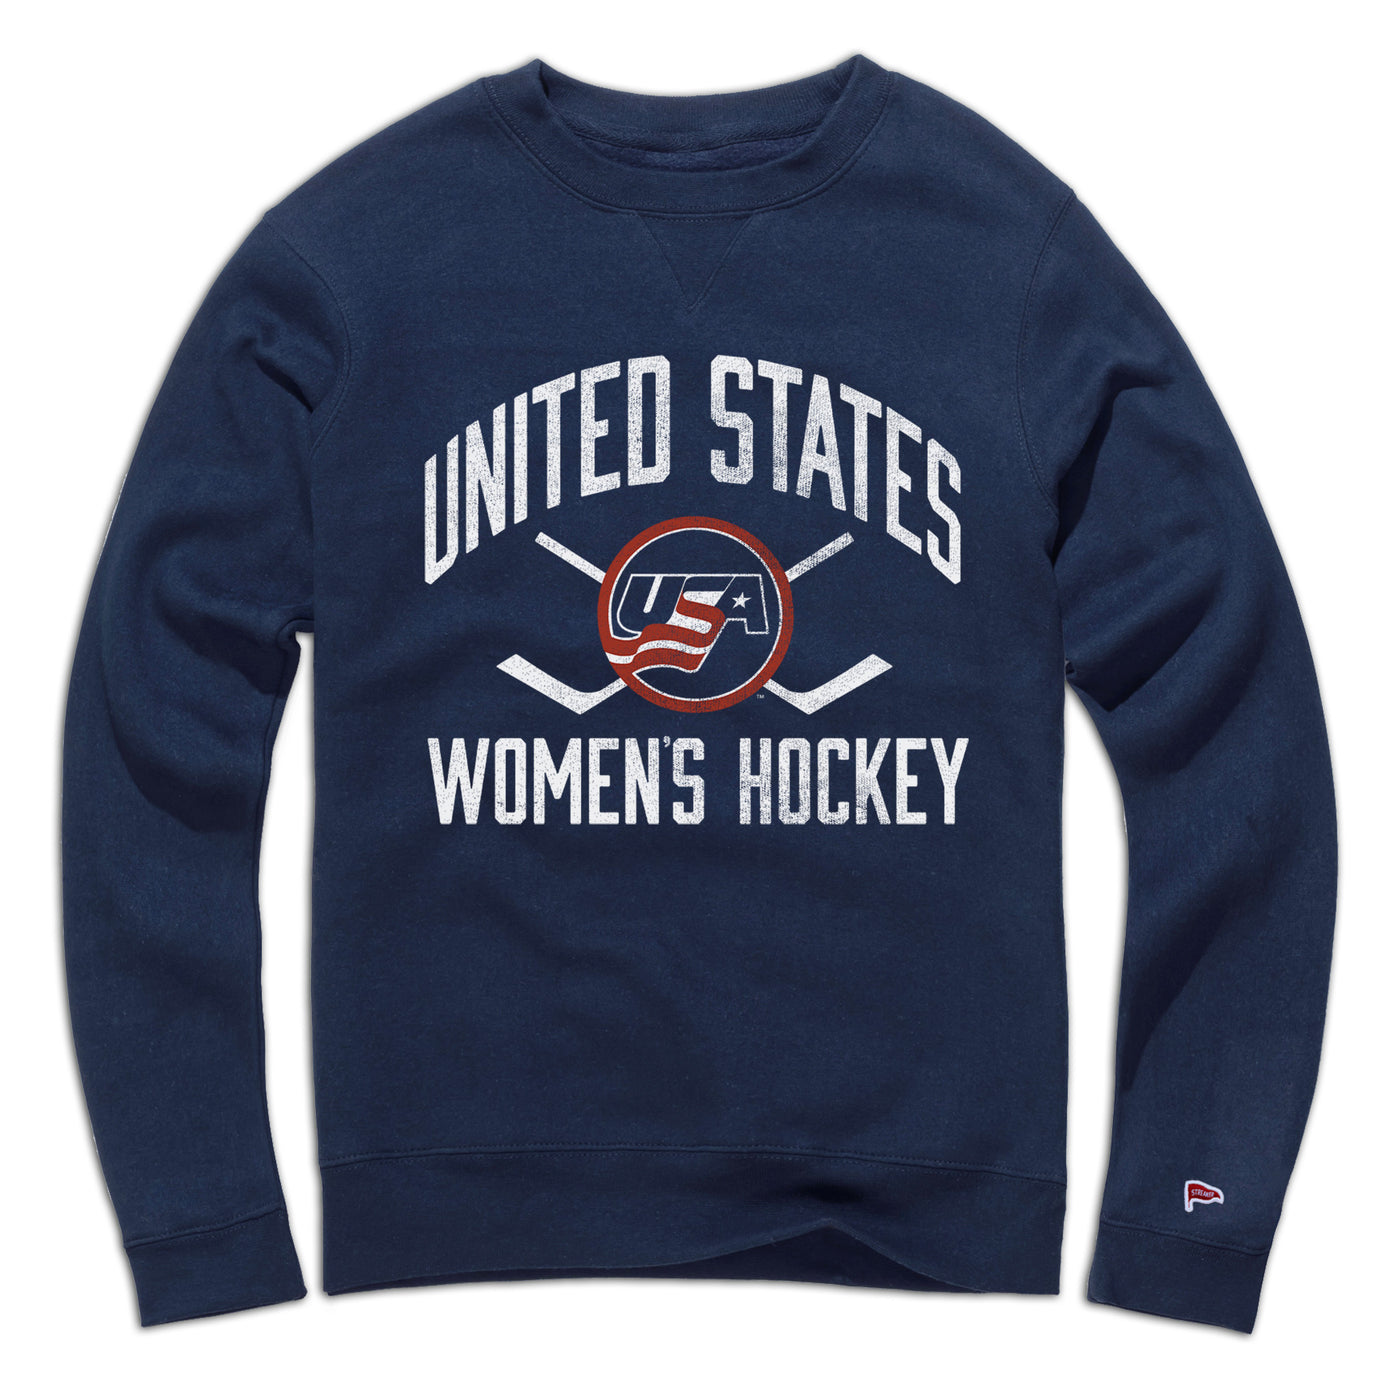 USA Womens Hockey Alternate Crest Crewneck Sweatshirt - Streaker Sports